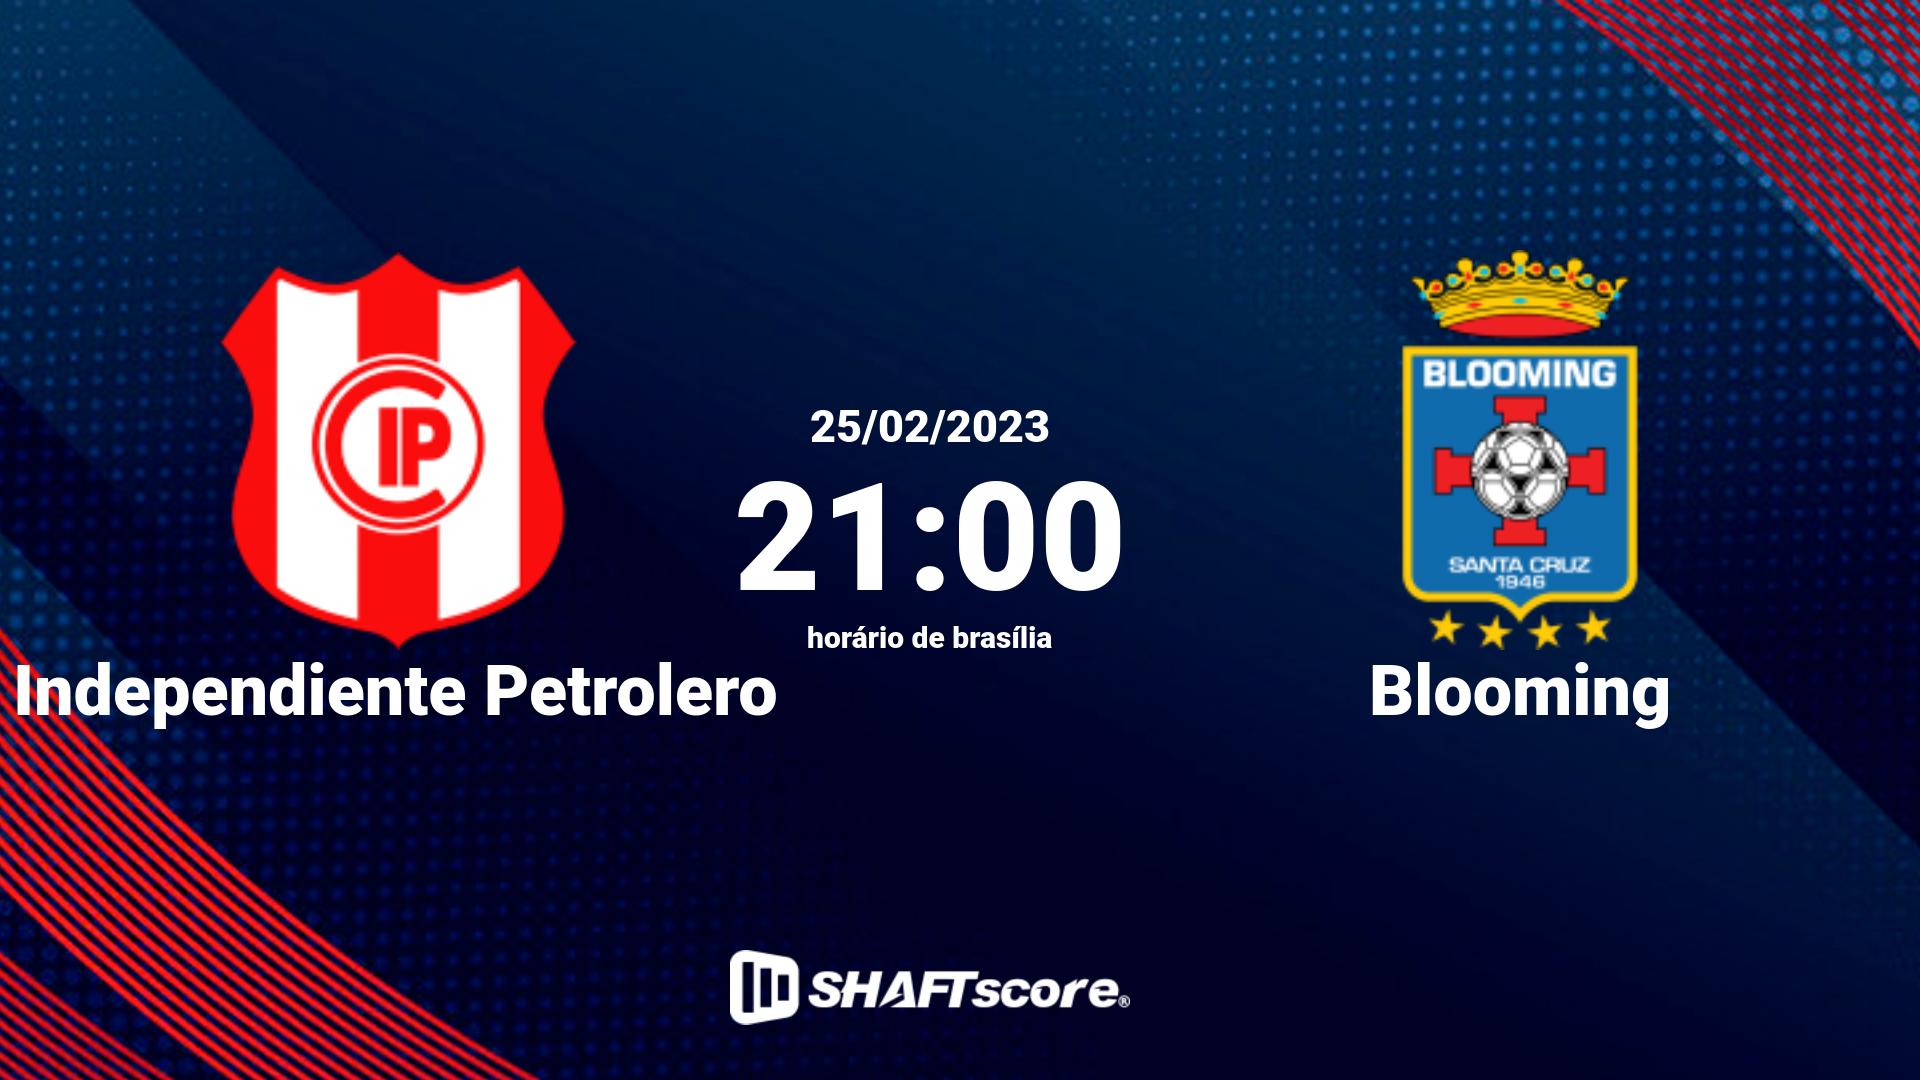 Estatísticas do jogo Independiente Petrolero vs Blooming 25.02 21:00